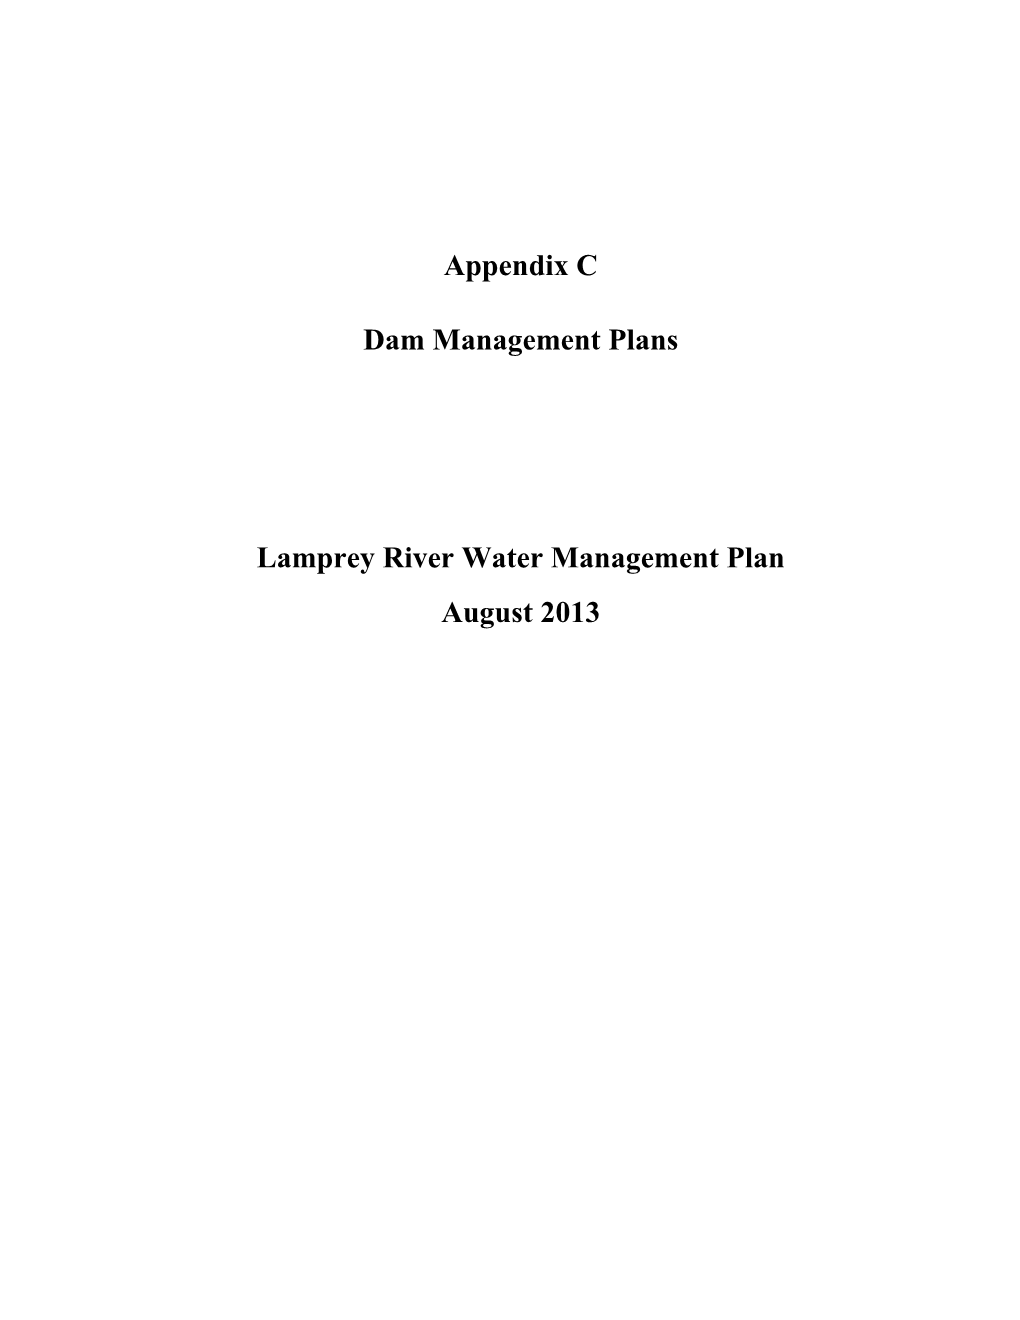 Lamprey River Water Management Plan Appendix C: Dam